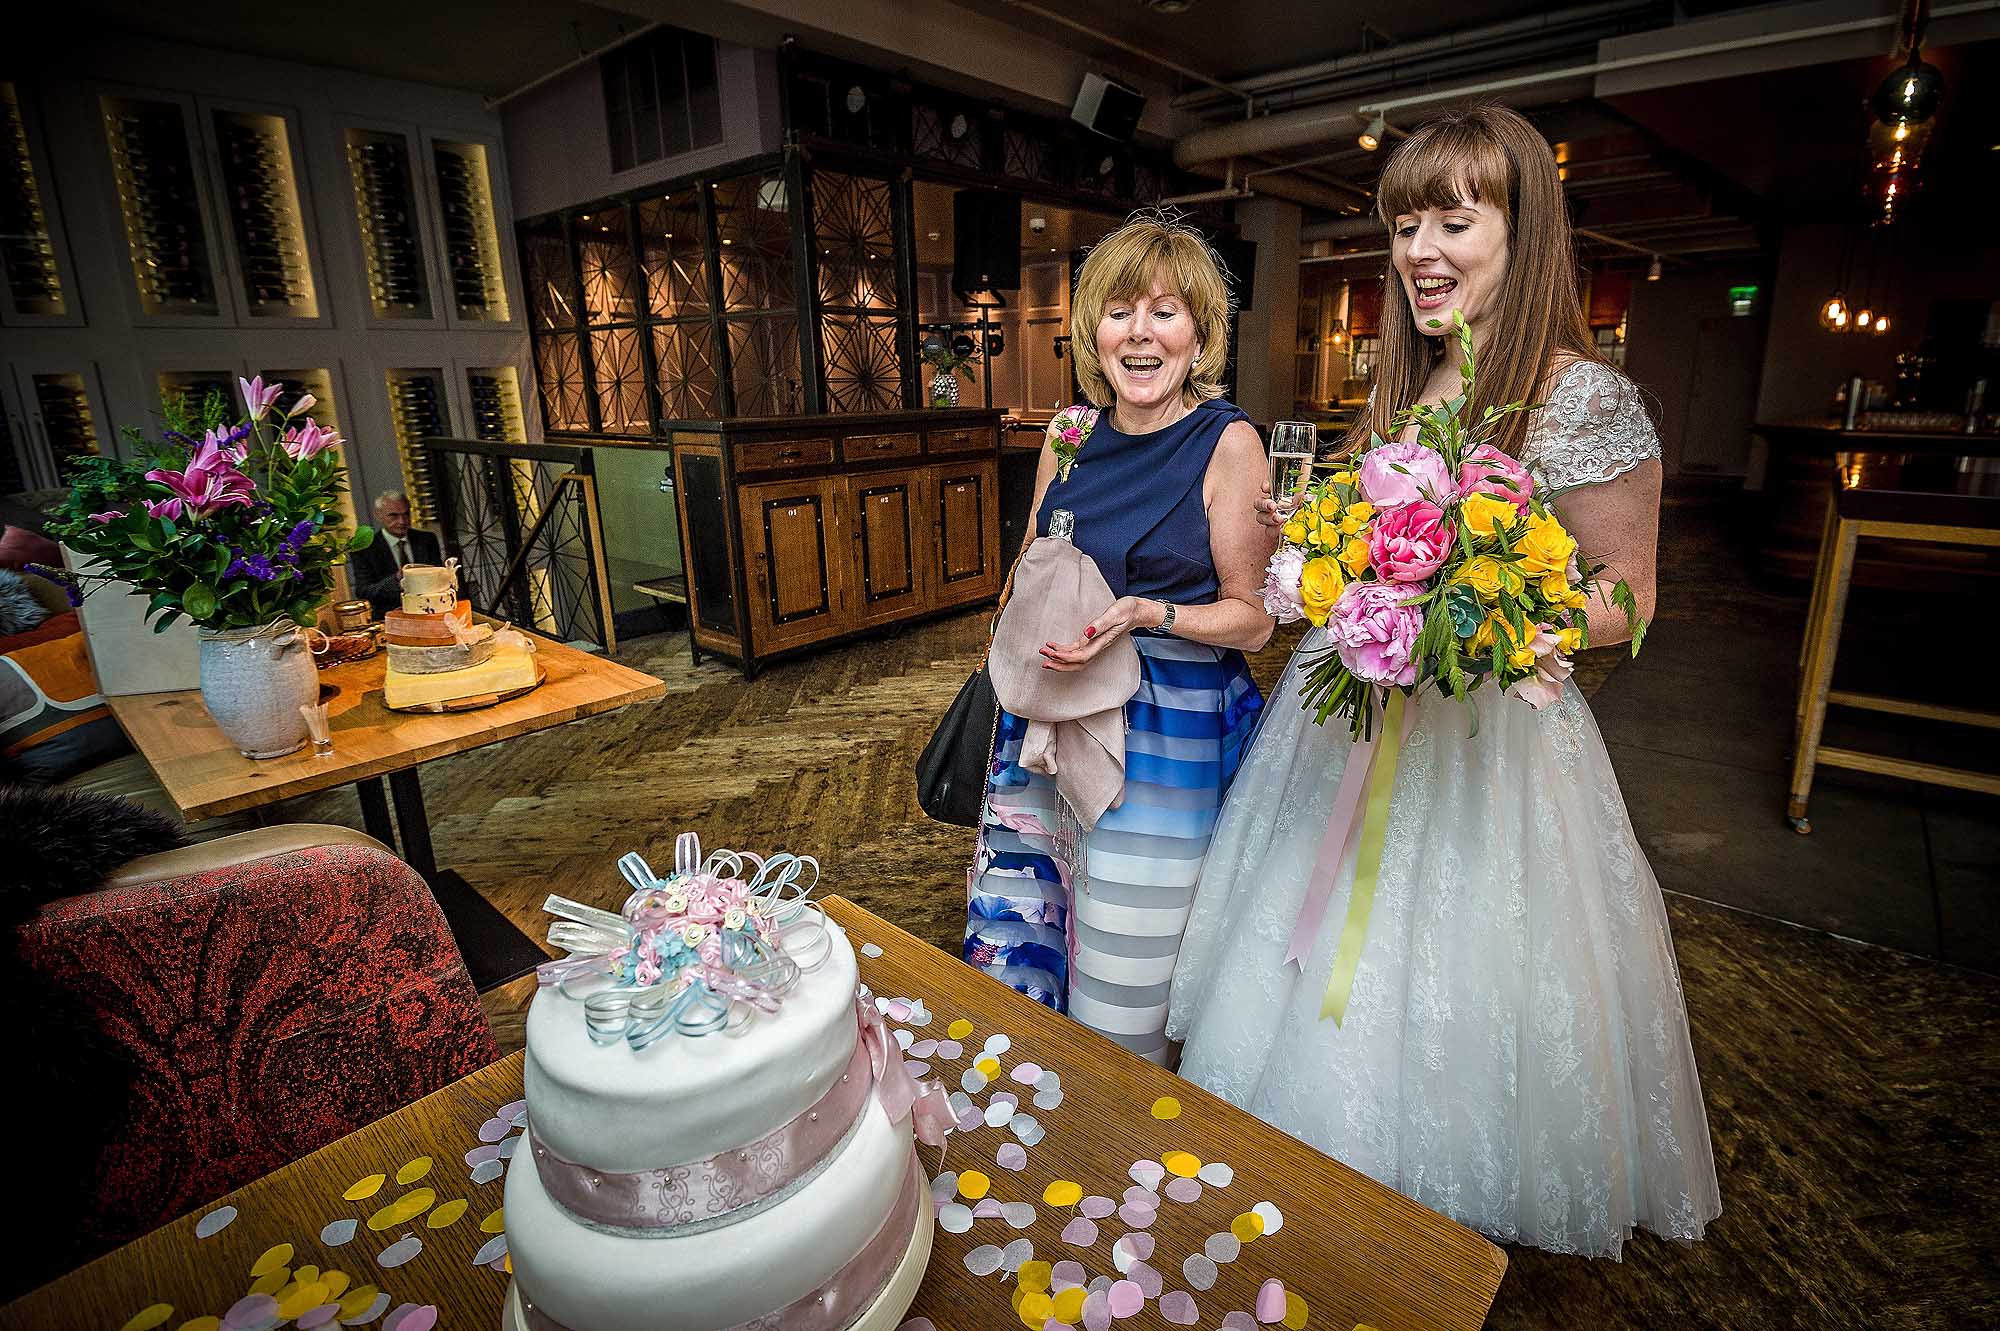 Bride with mum admiring wedding cake at reception